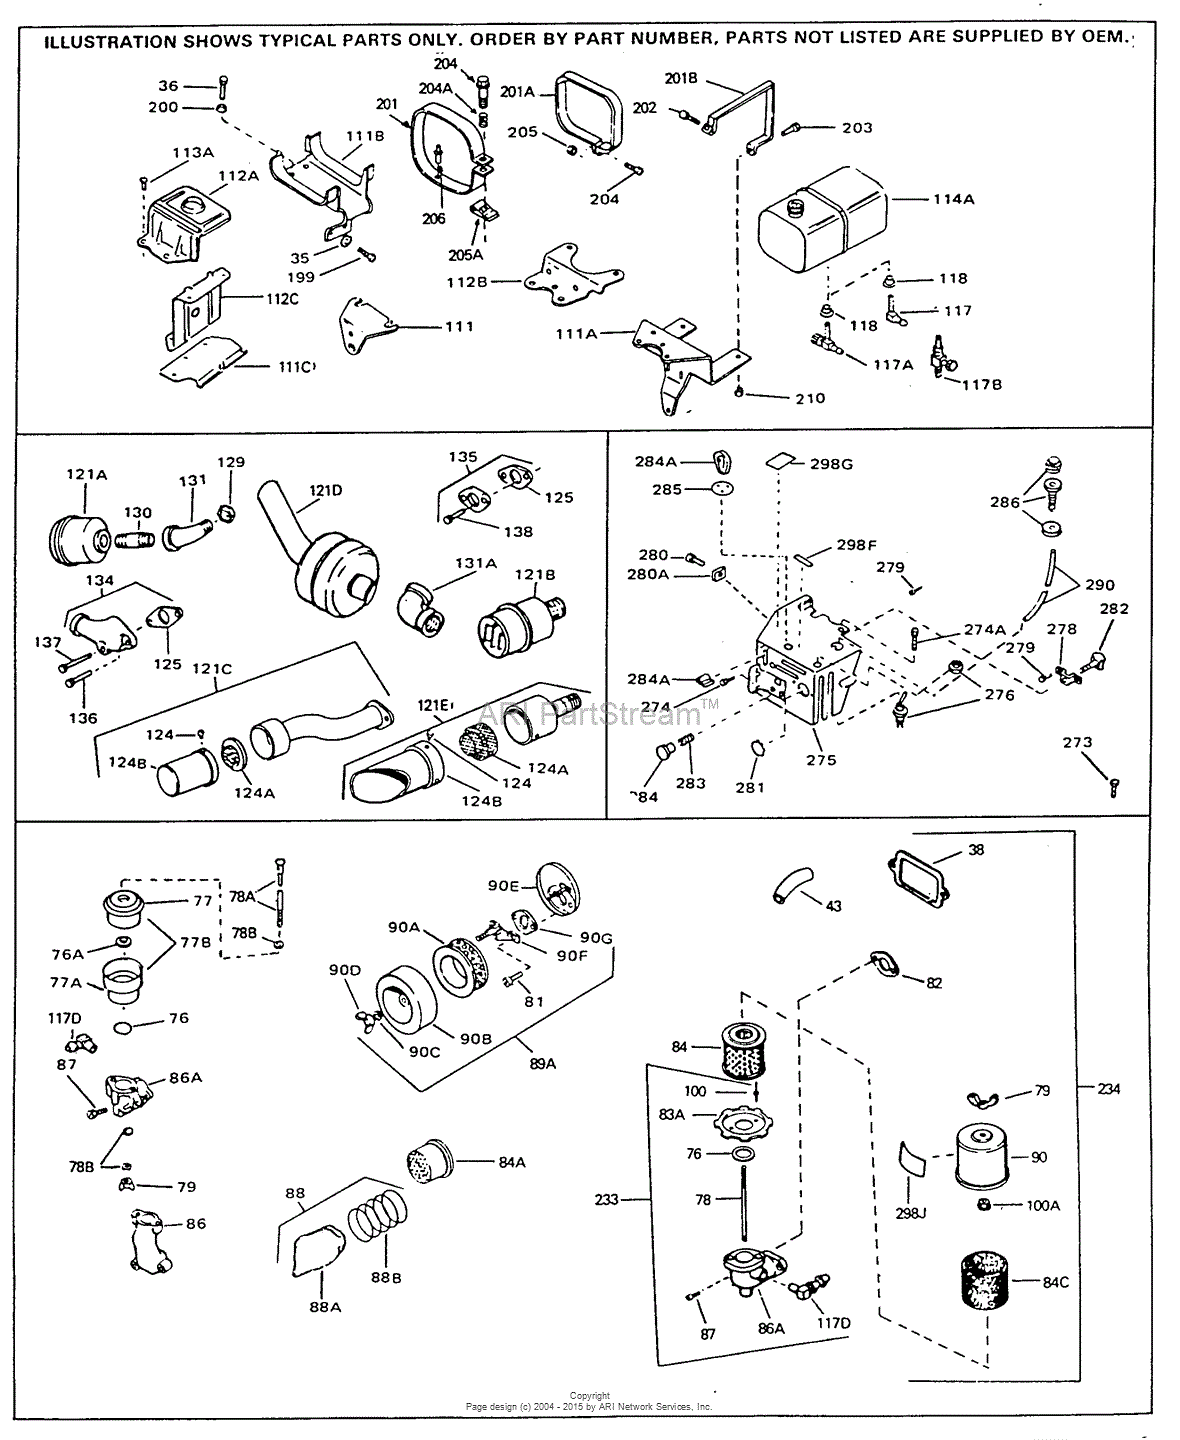 Tecumseh HH60-105106F Parts Diagram for Engine Parts List #2 tecumseh 2 cycle engine diagram 